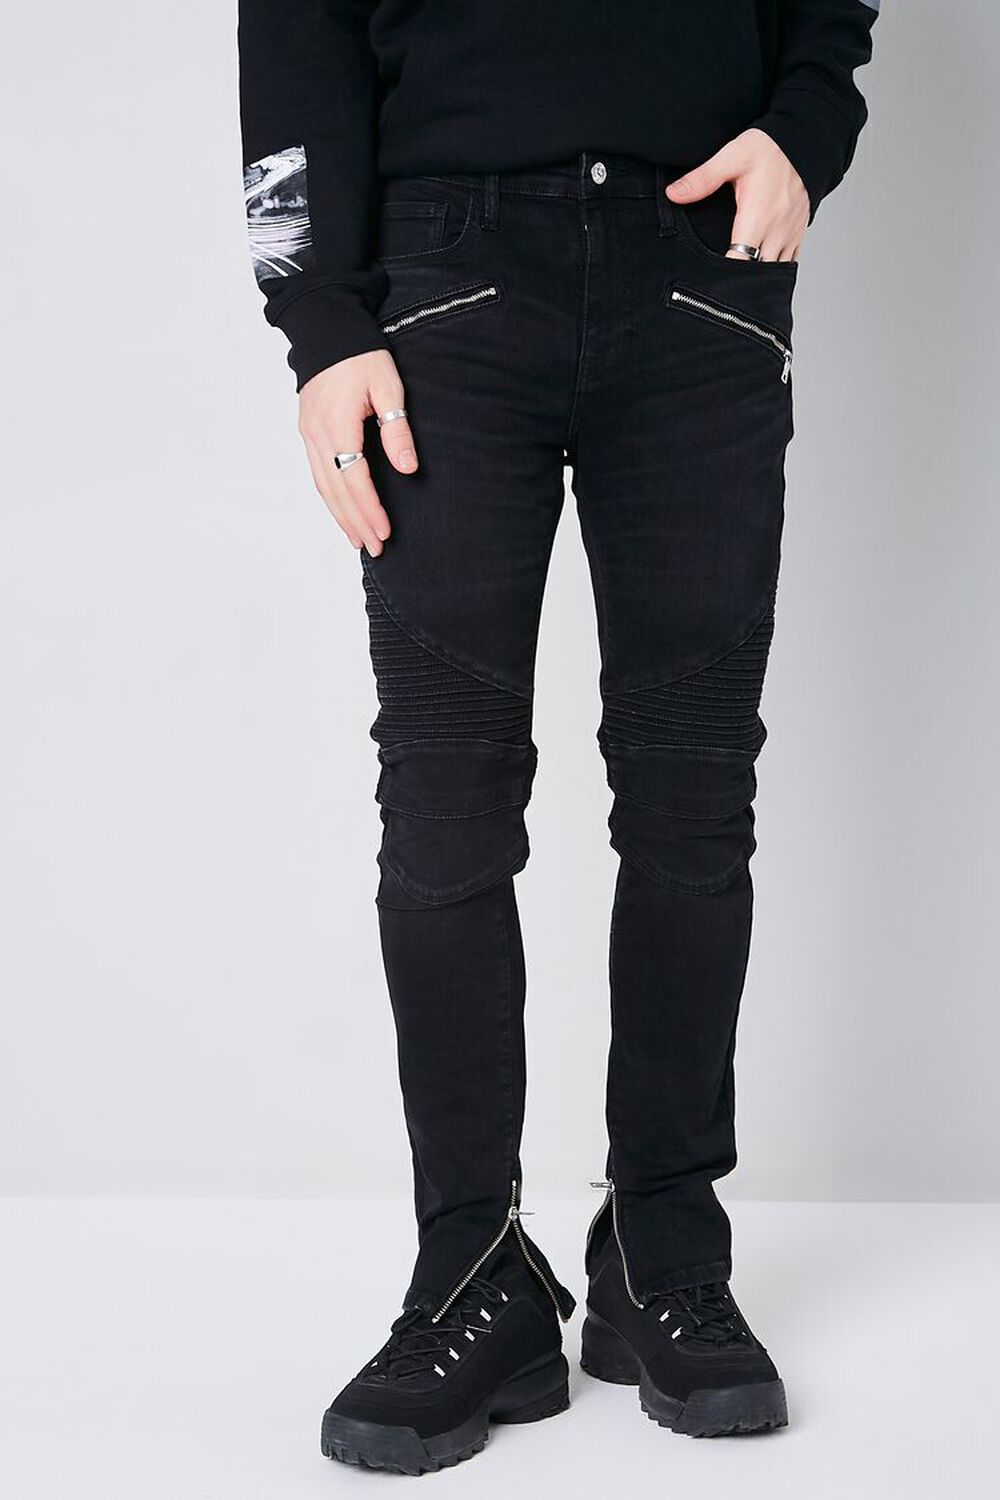 BLACK Stonewash Skinny Moto Jeans, image 2